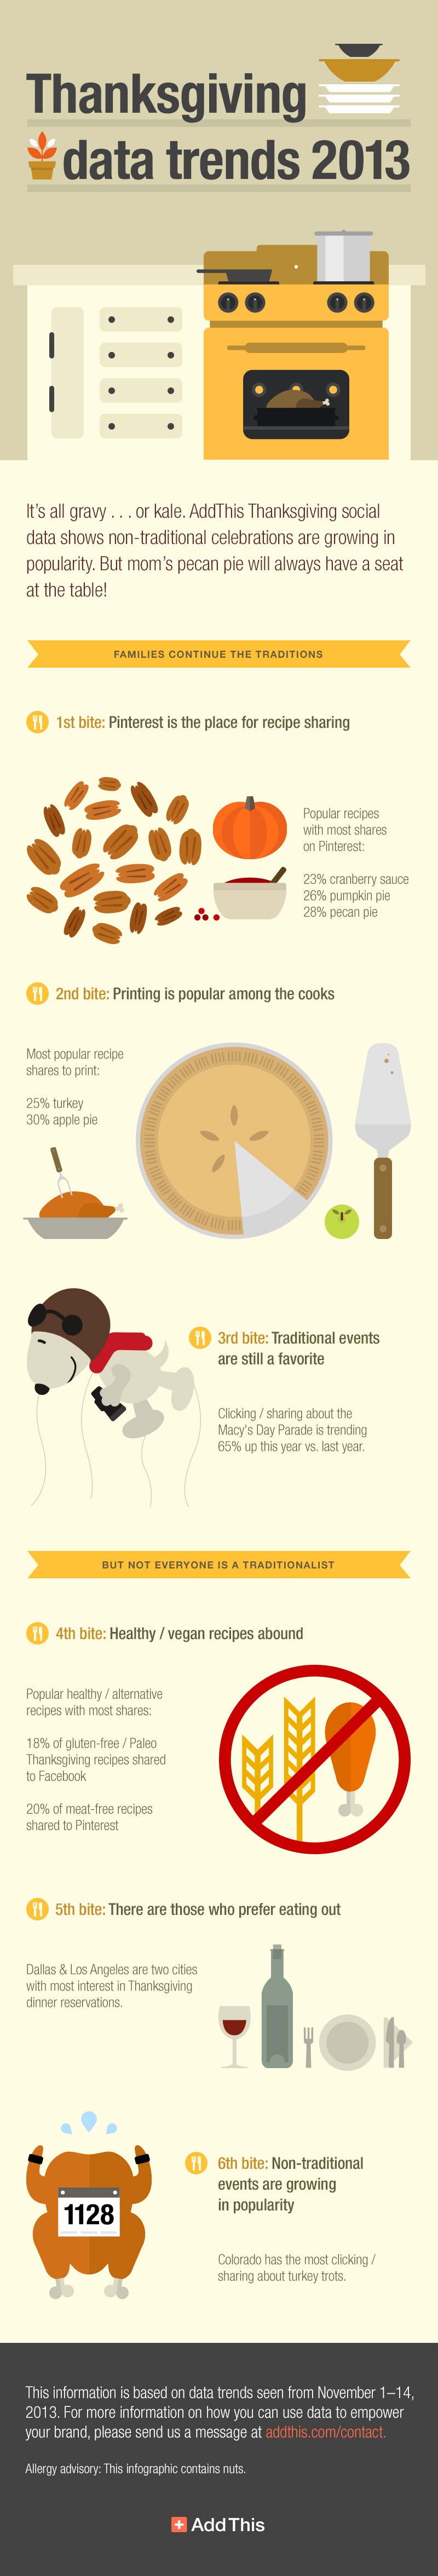 turkey_infographic_RD1-1 (1)